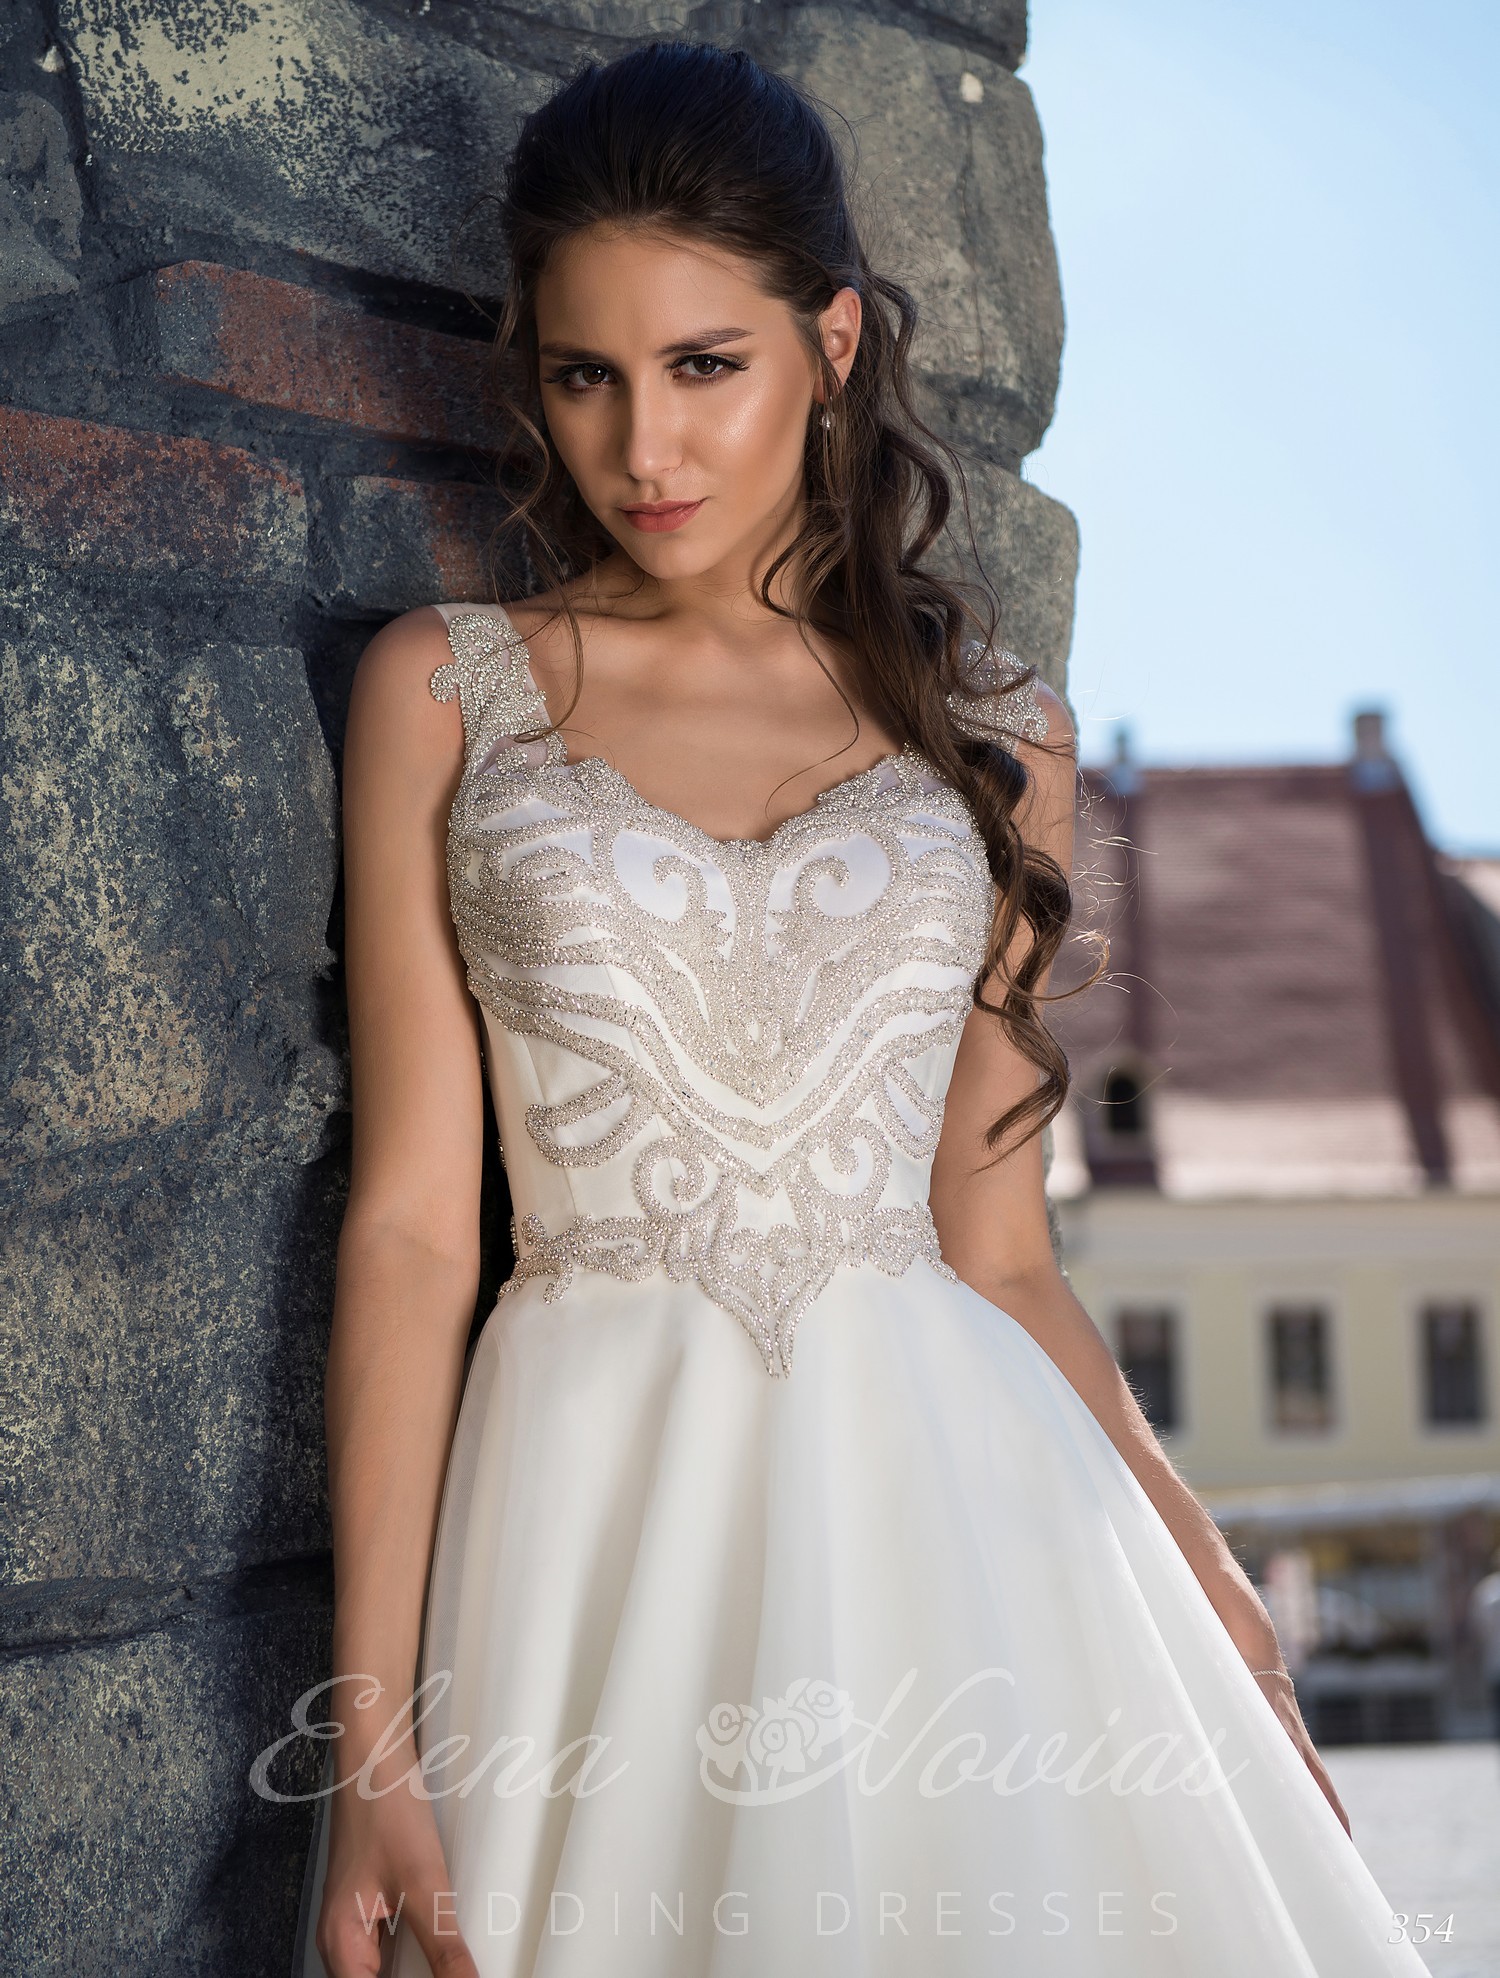 Wedding dress wholesale 354